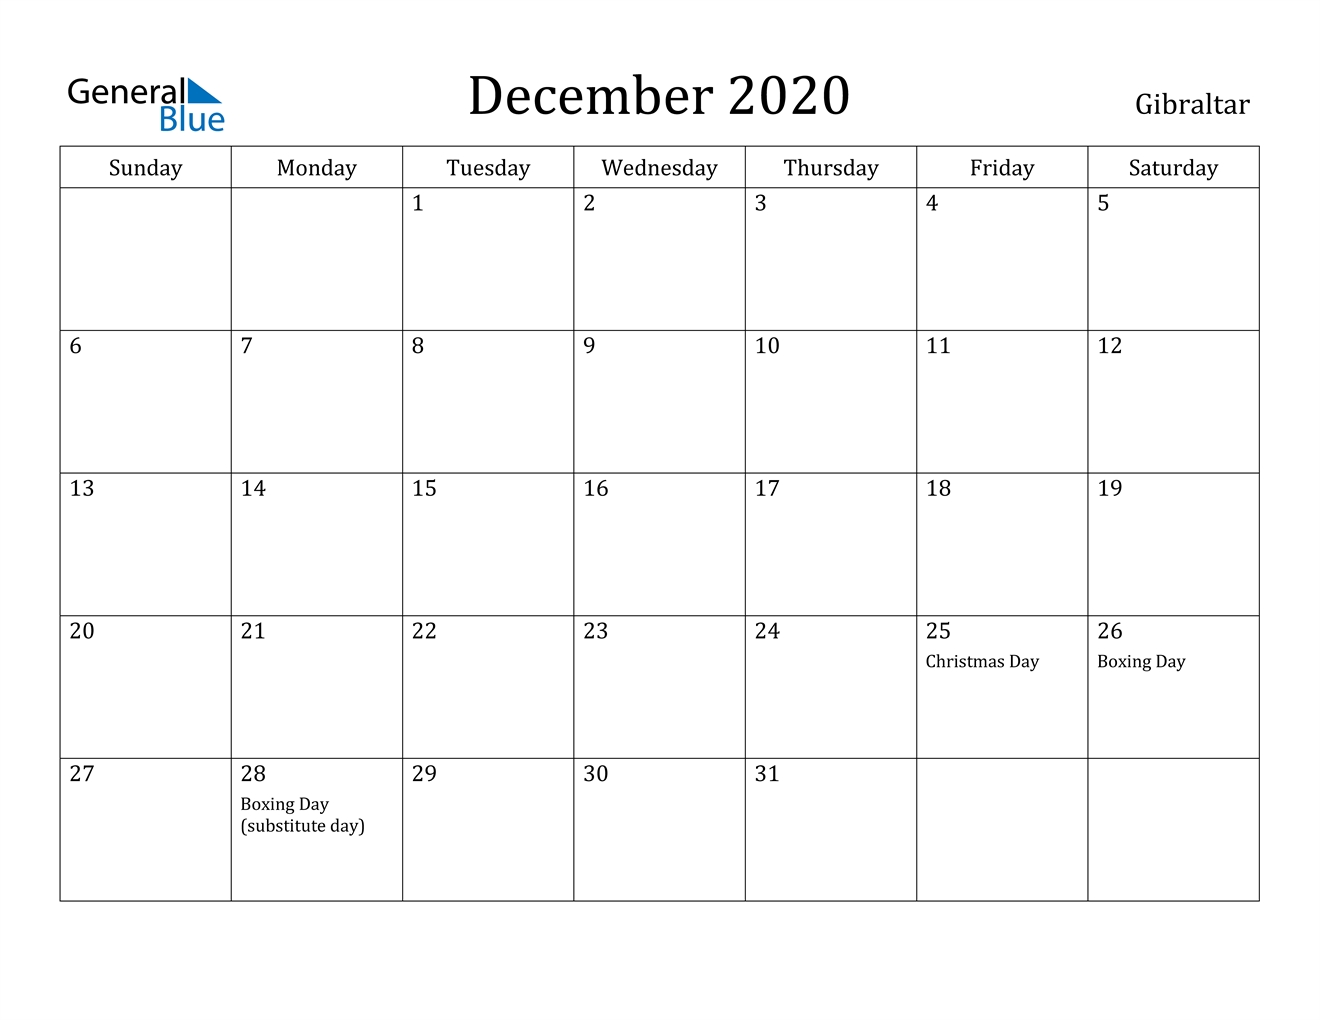 December 2020 Calendar - Gibraltar December 2020 Calendar Boxing Day